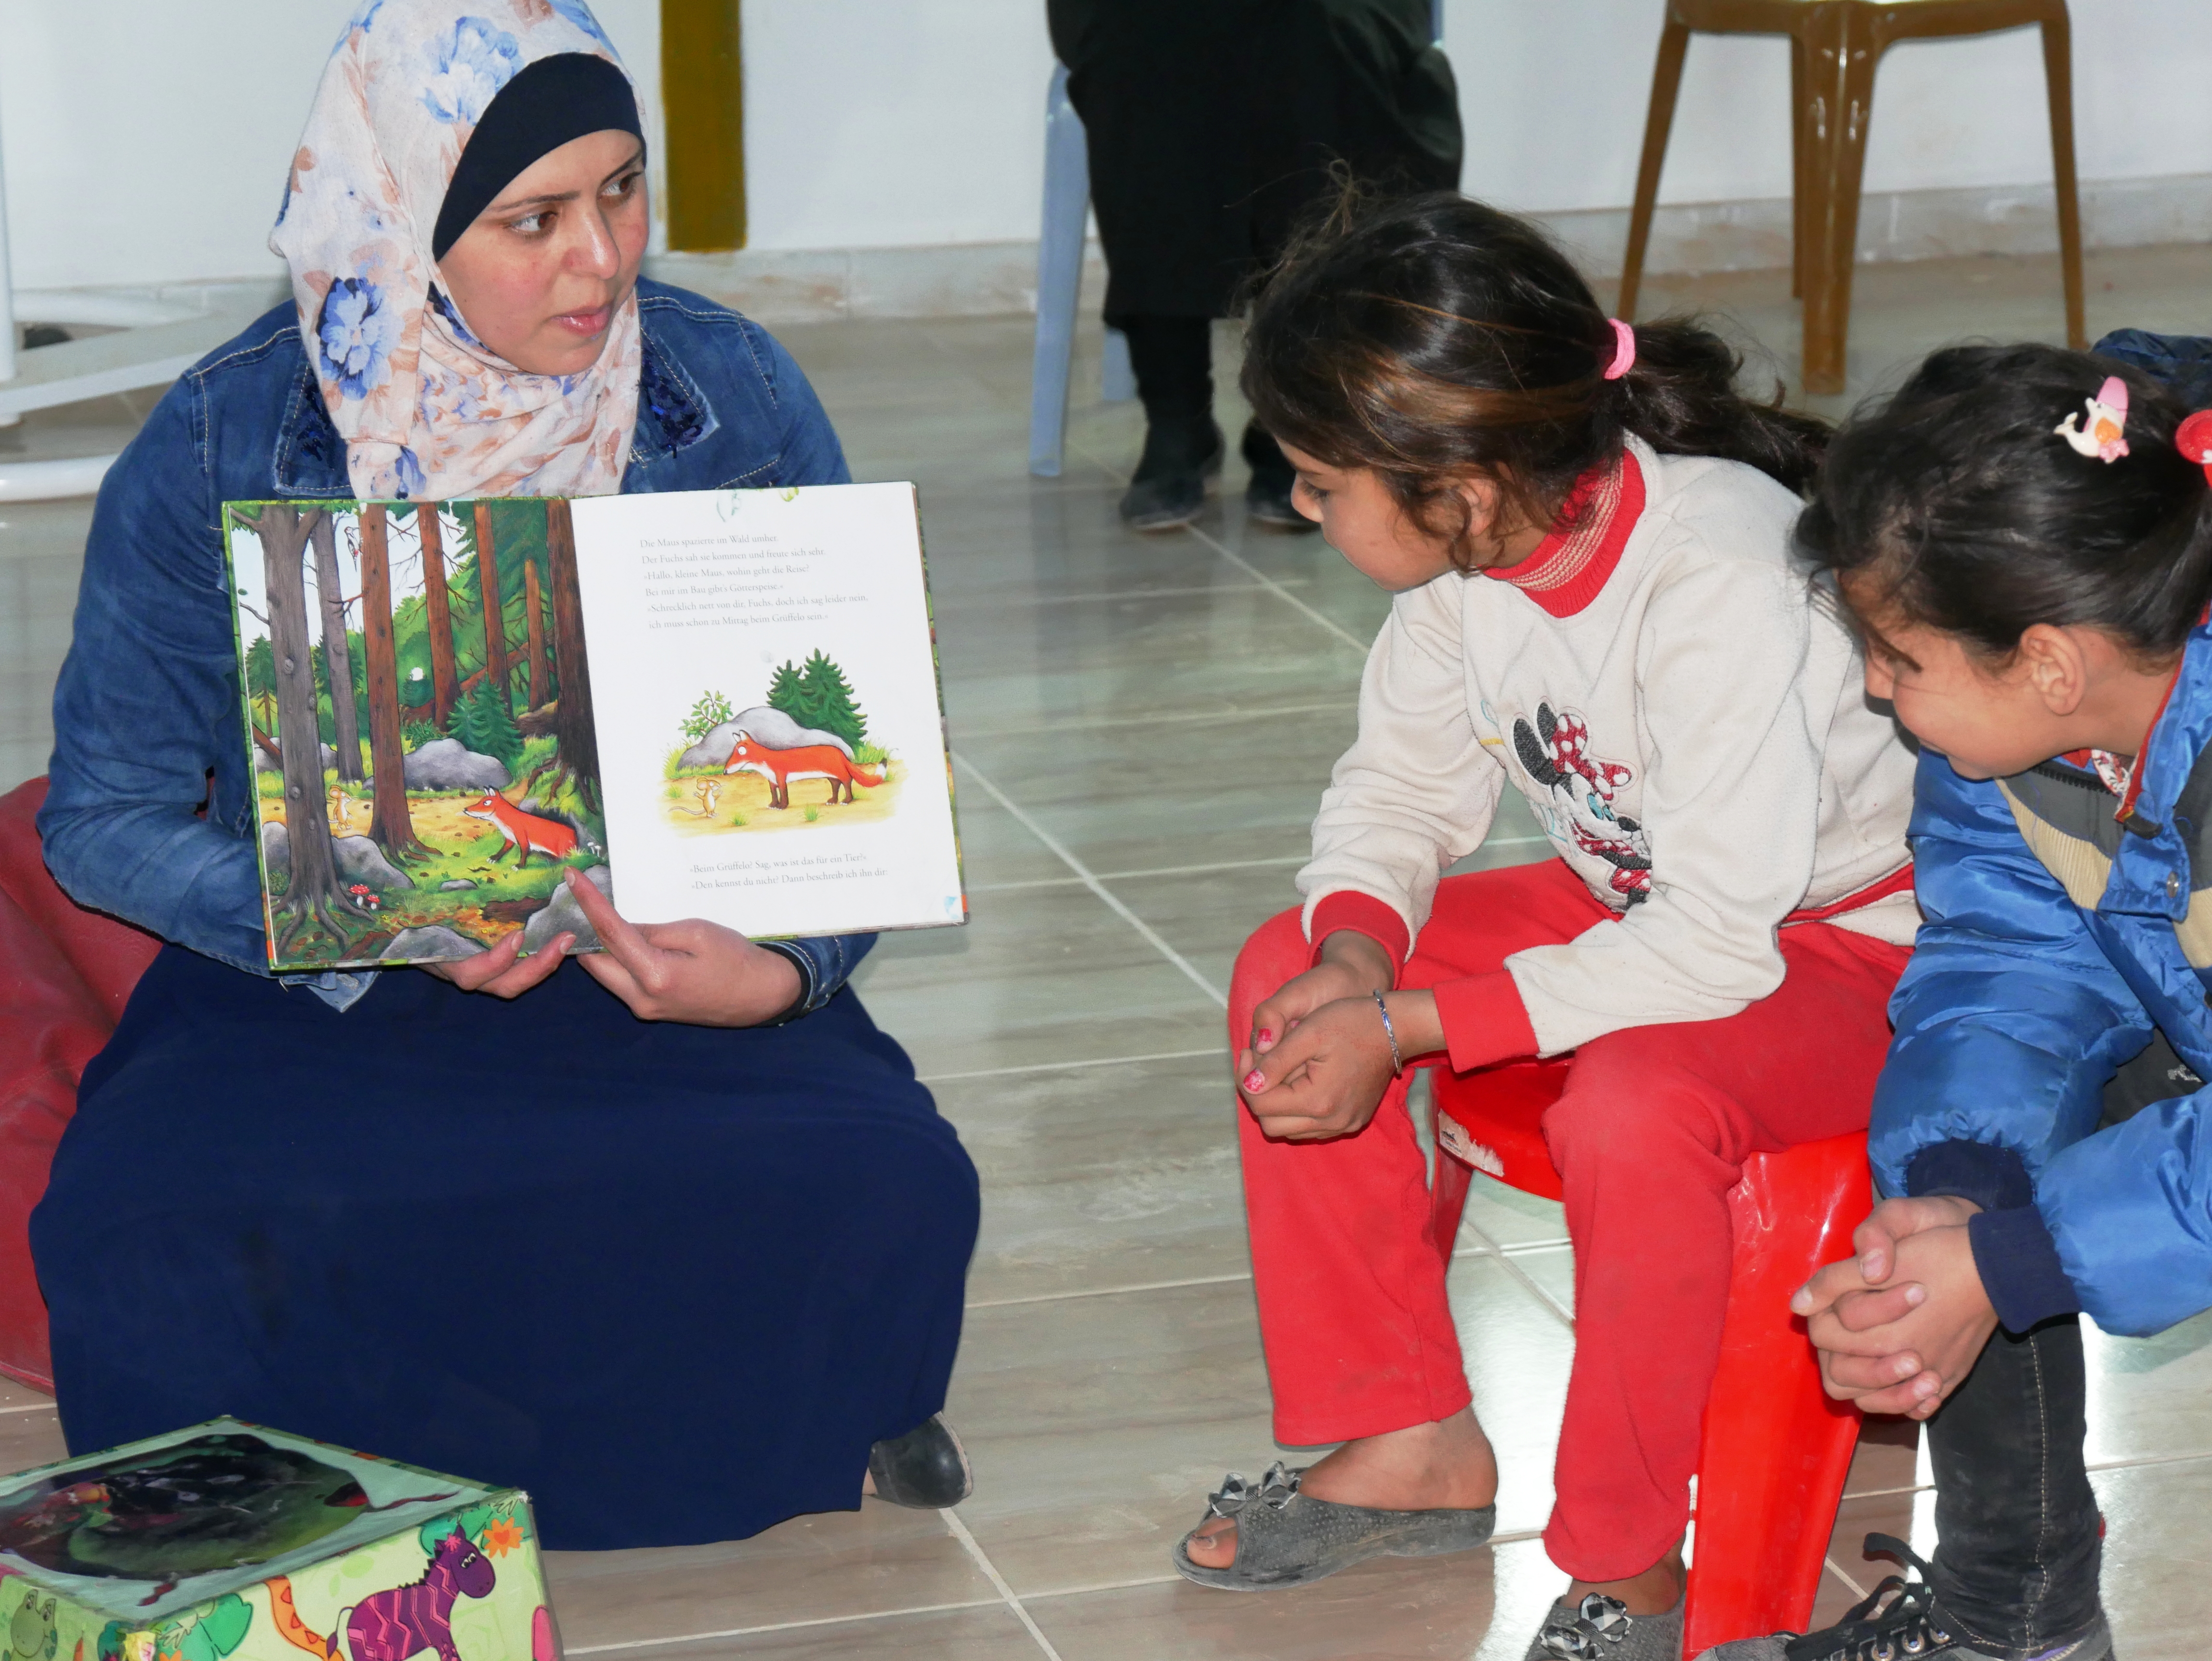 Reading "The Gruffalo" to a group of refugee children (photo: Dana Ritzmann)